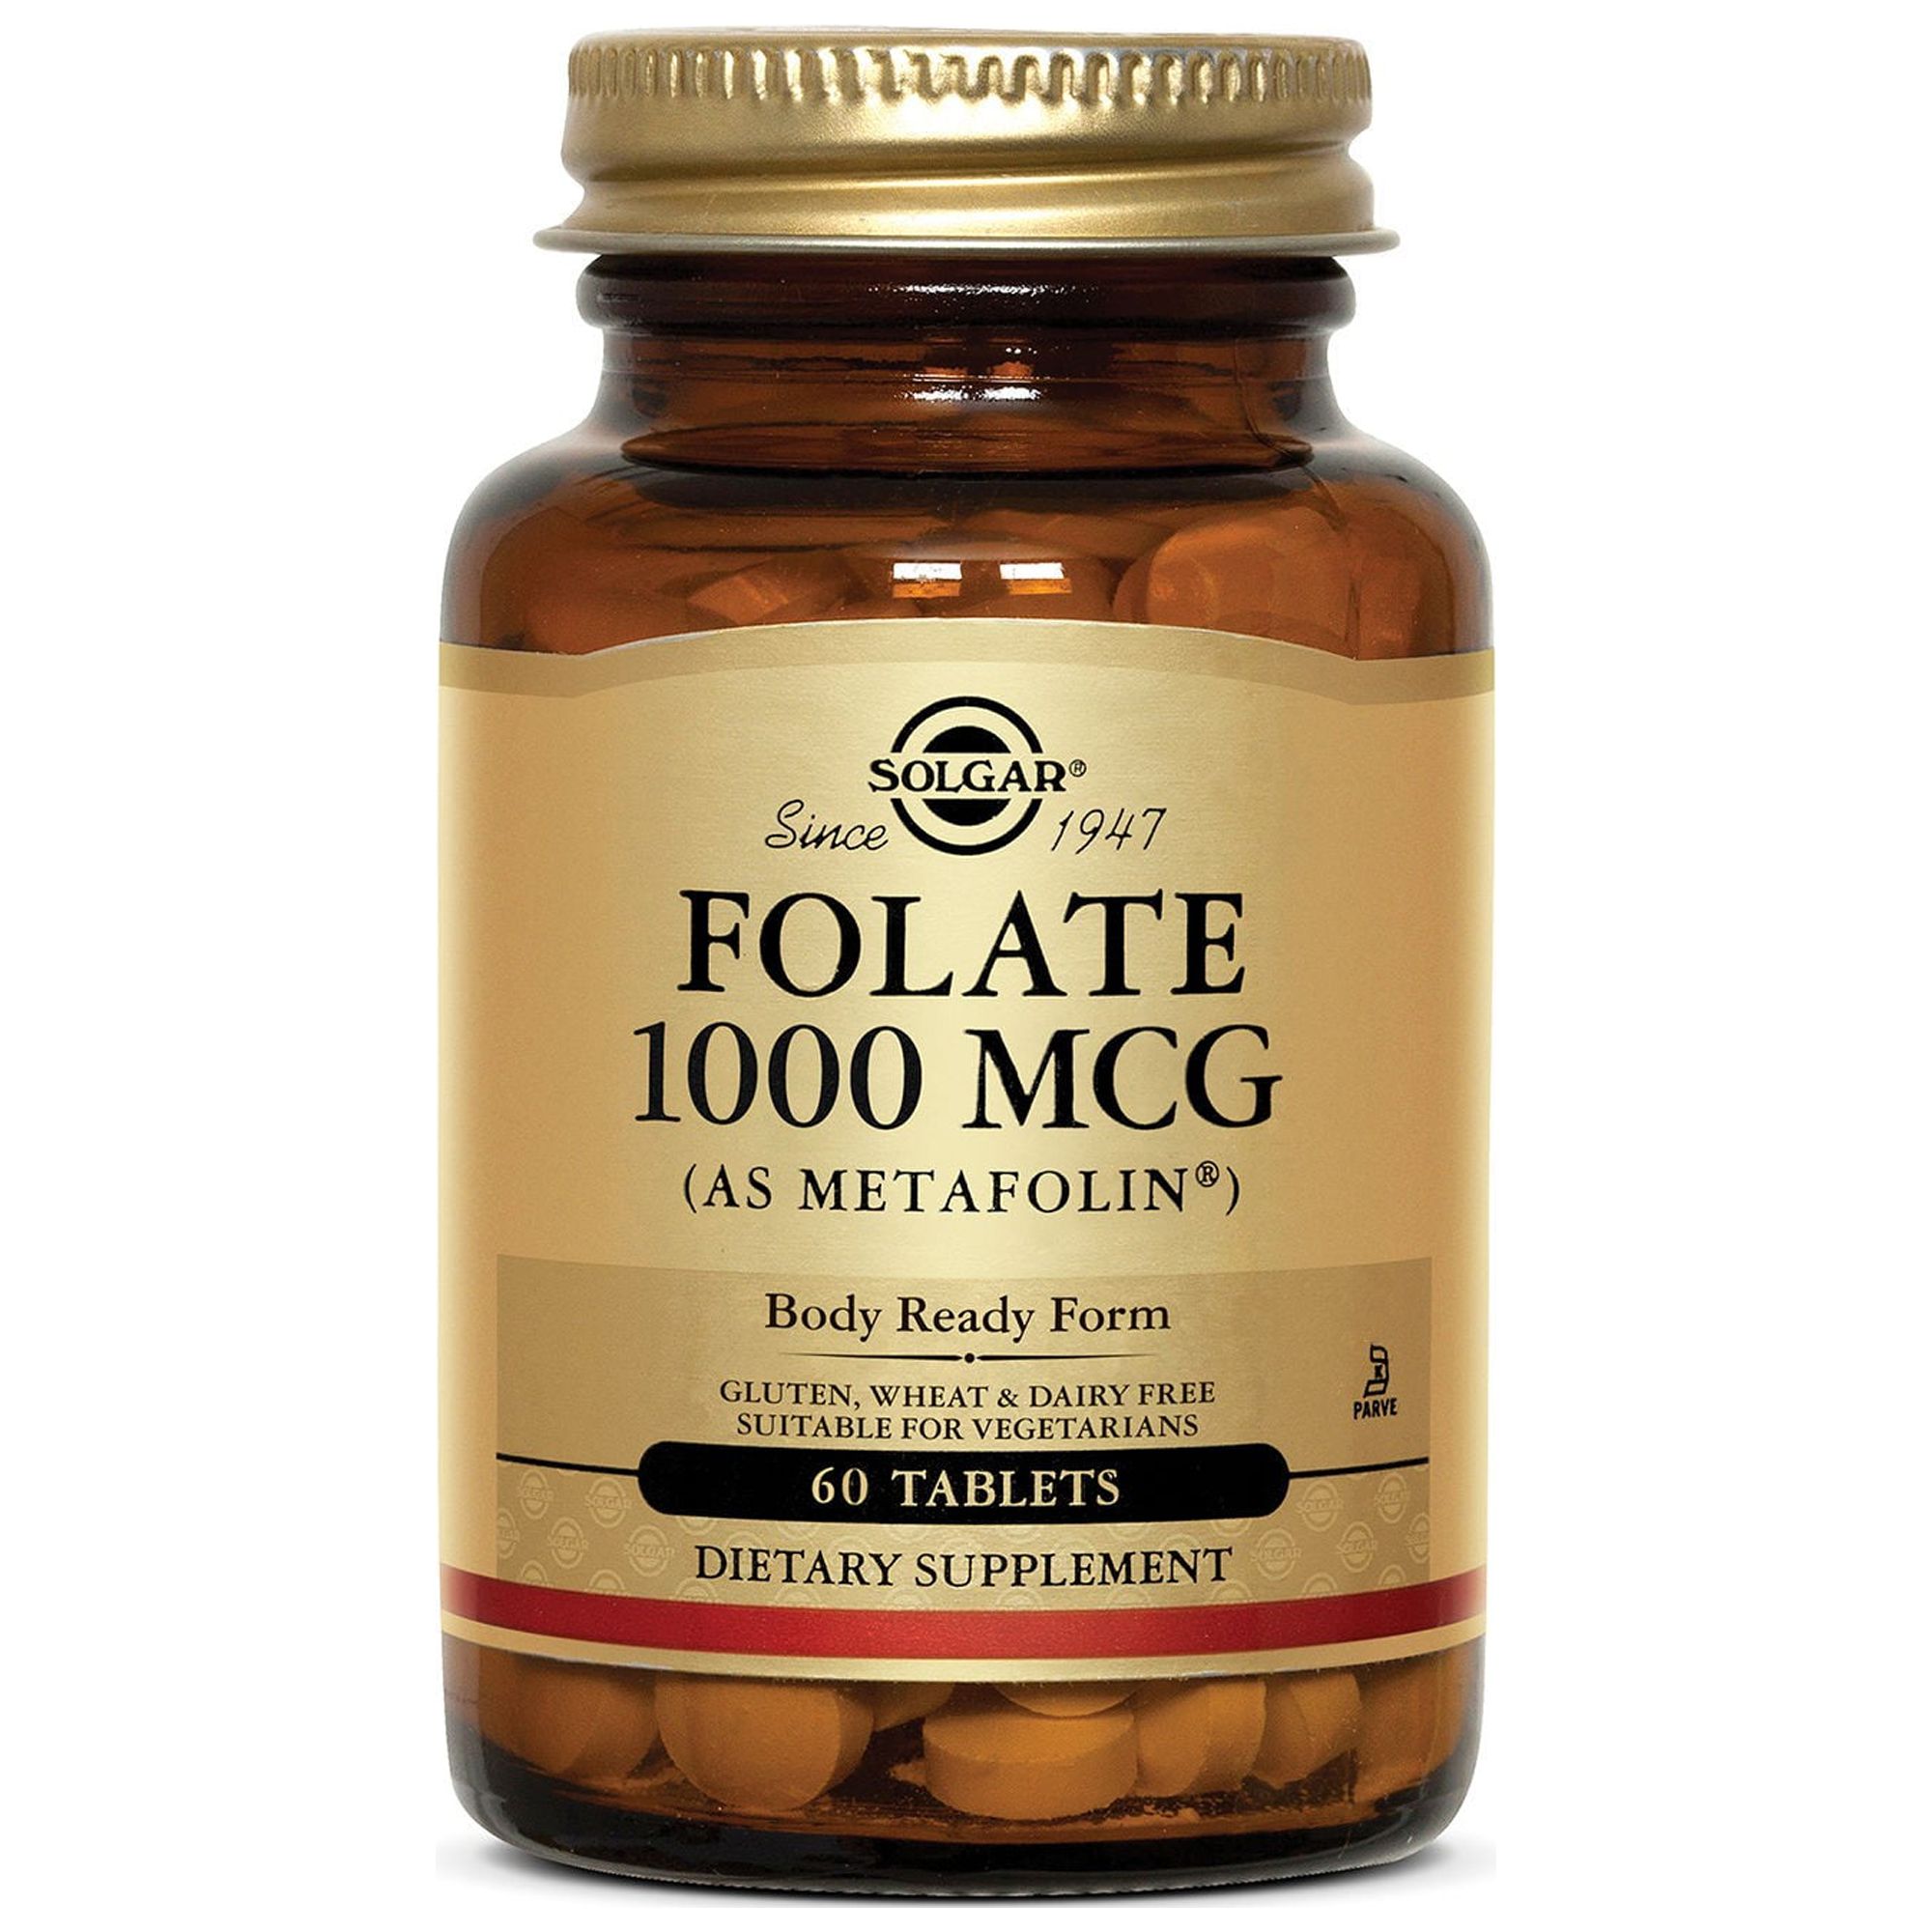 Solgar folate 1000 mcg (as metafolin) tablets, 60 ct - image 1 of 2